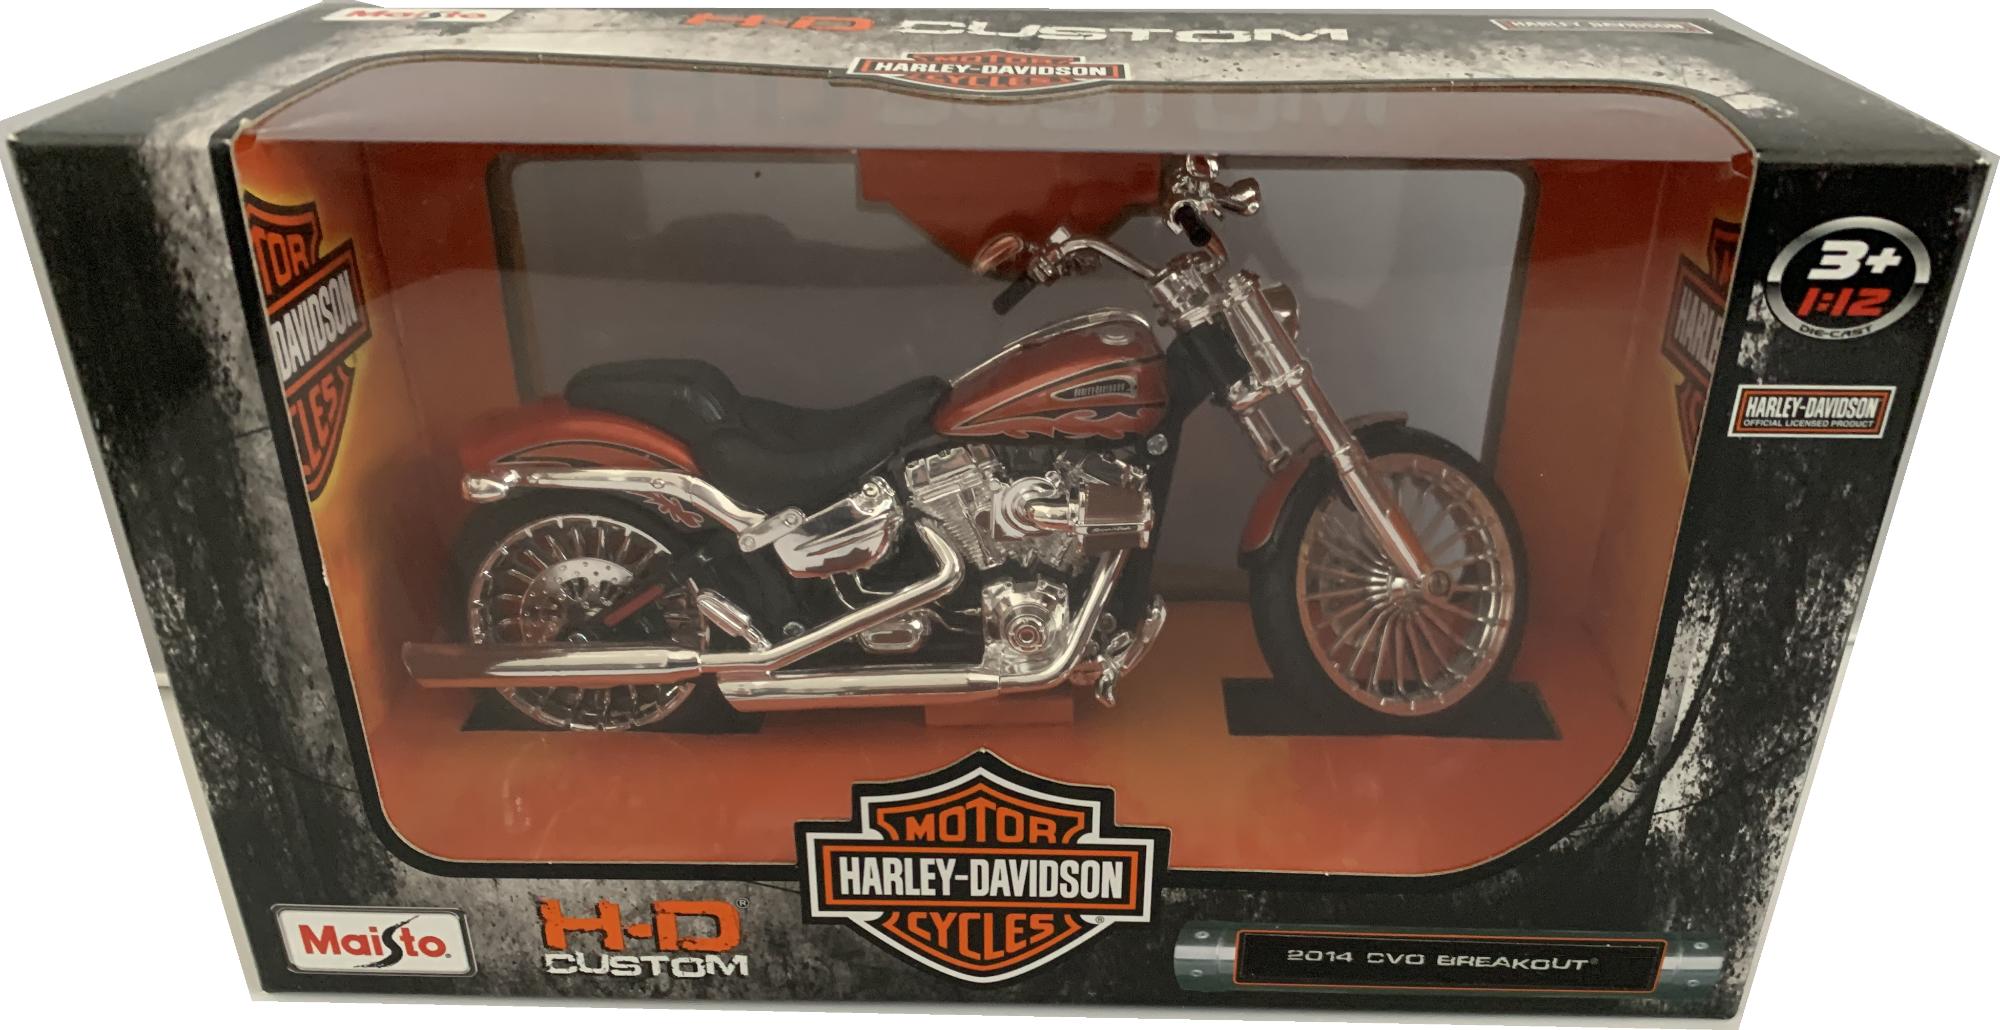 Harley-Davidson-2014-CVO-Breakout-1-12-scale-model-from-Maisto---4986.html